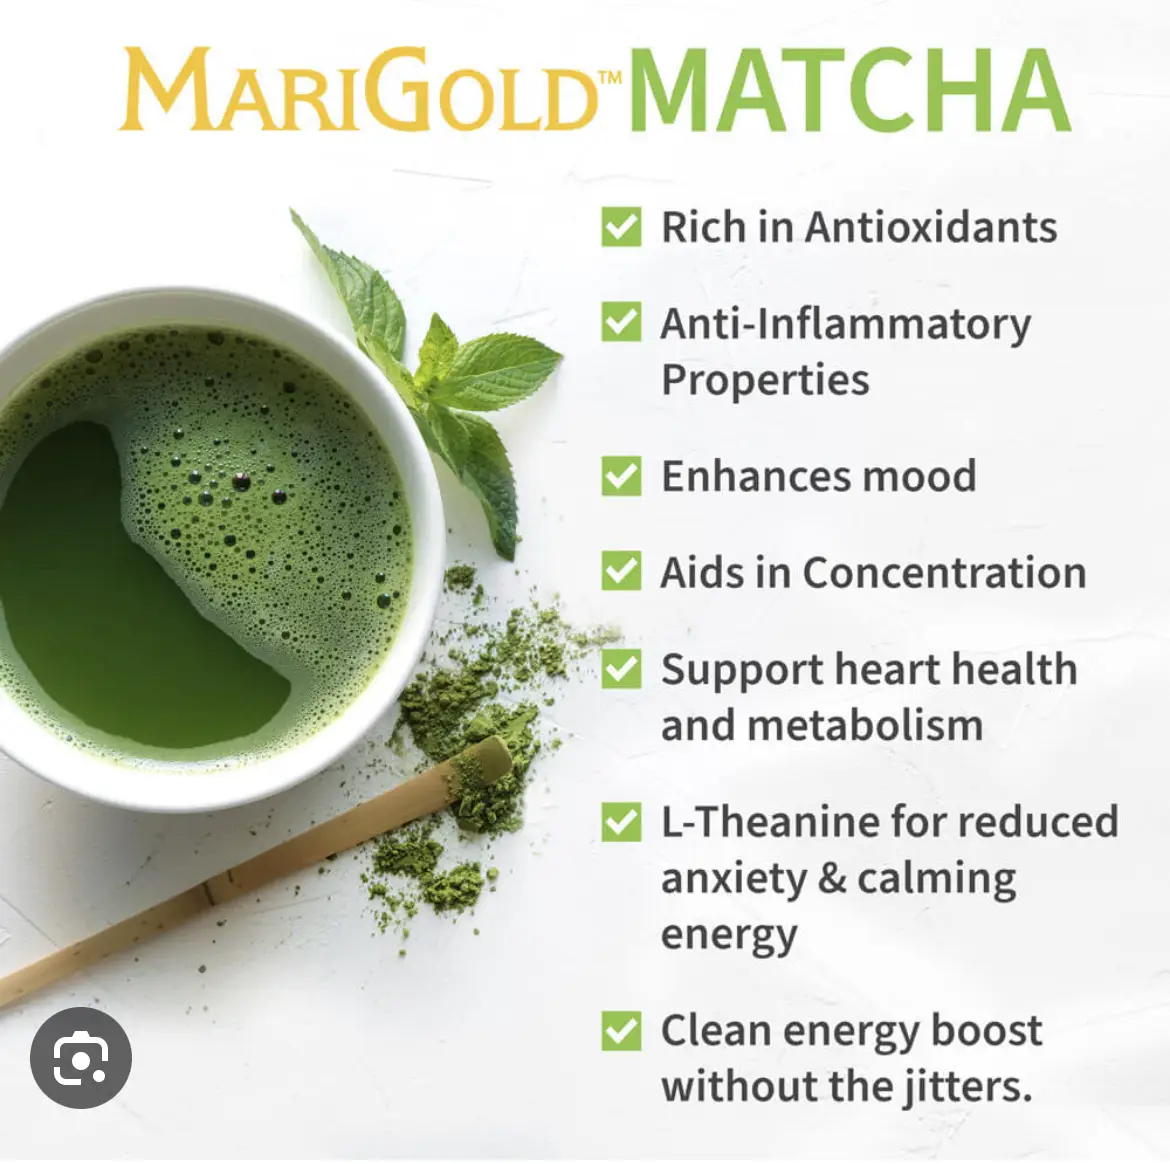 Collagen Matcha Latte Mix - Unsweetened – Jade Leaf Matcha